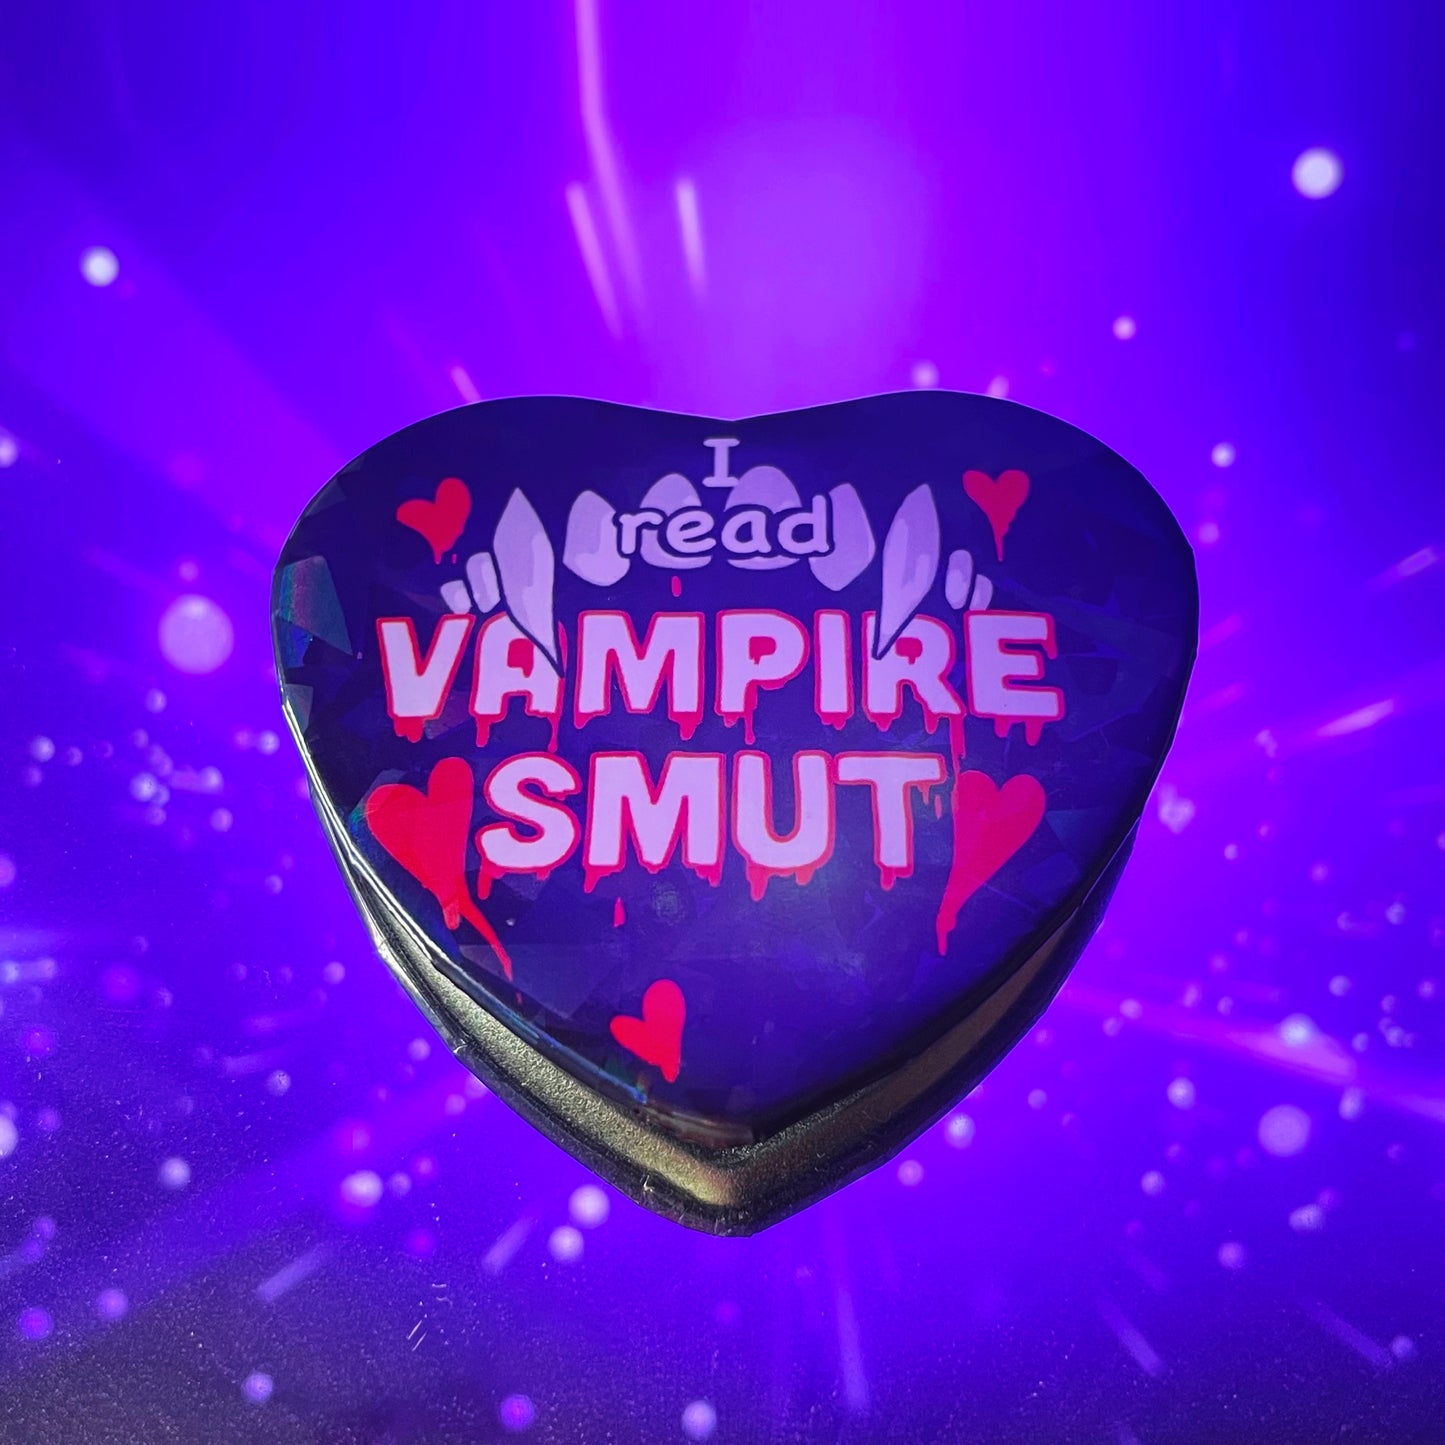 Vampire Smut Heart Button